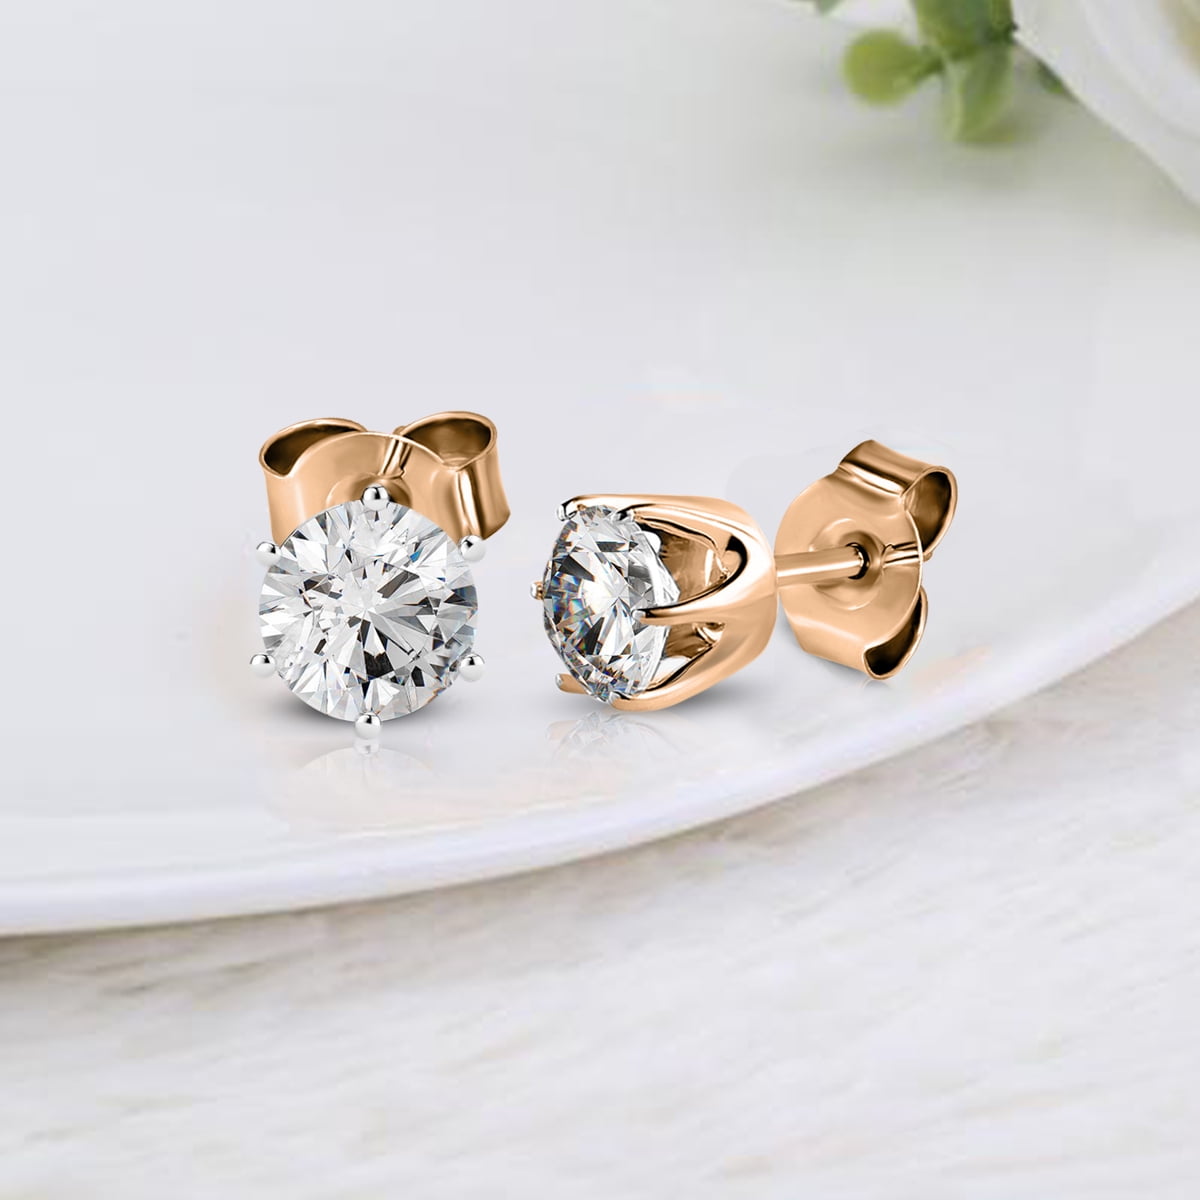 Showroom of Rose gold earrings | Jewelxy - 224388